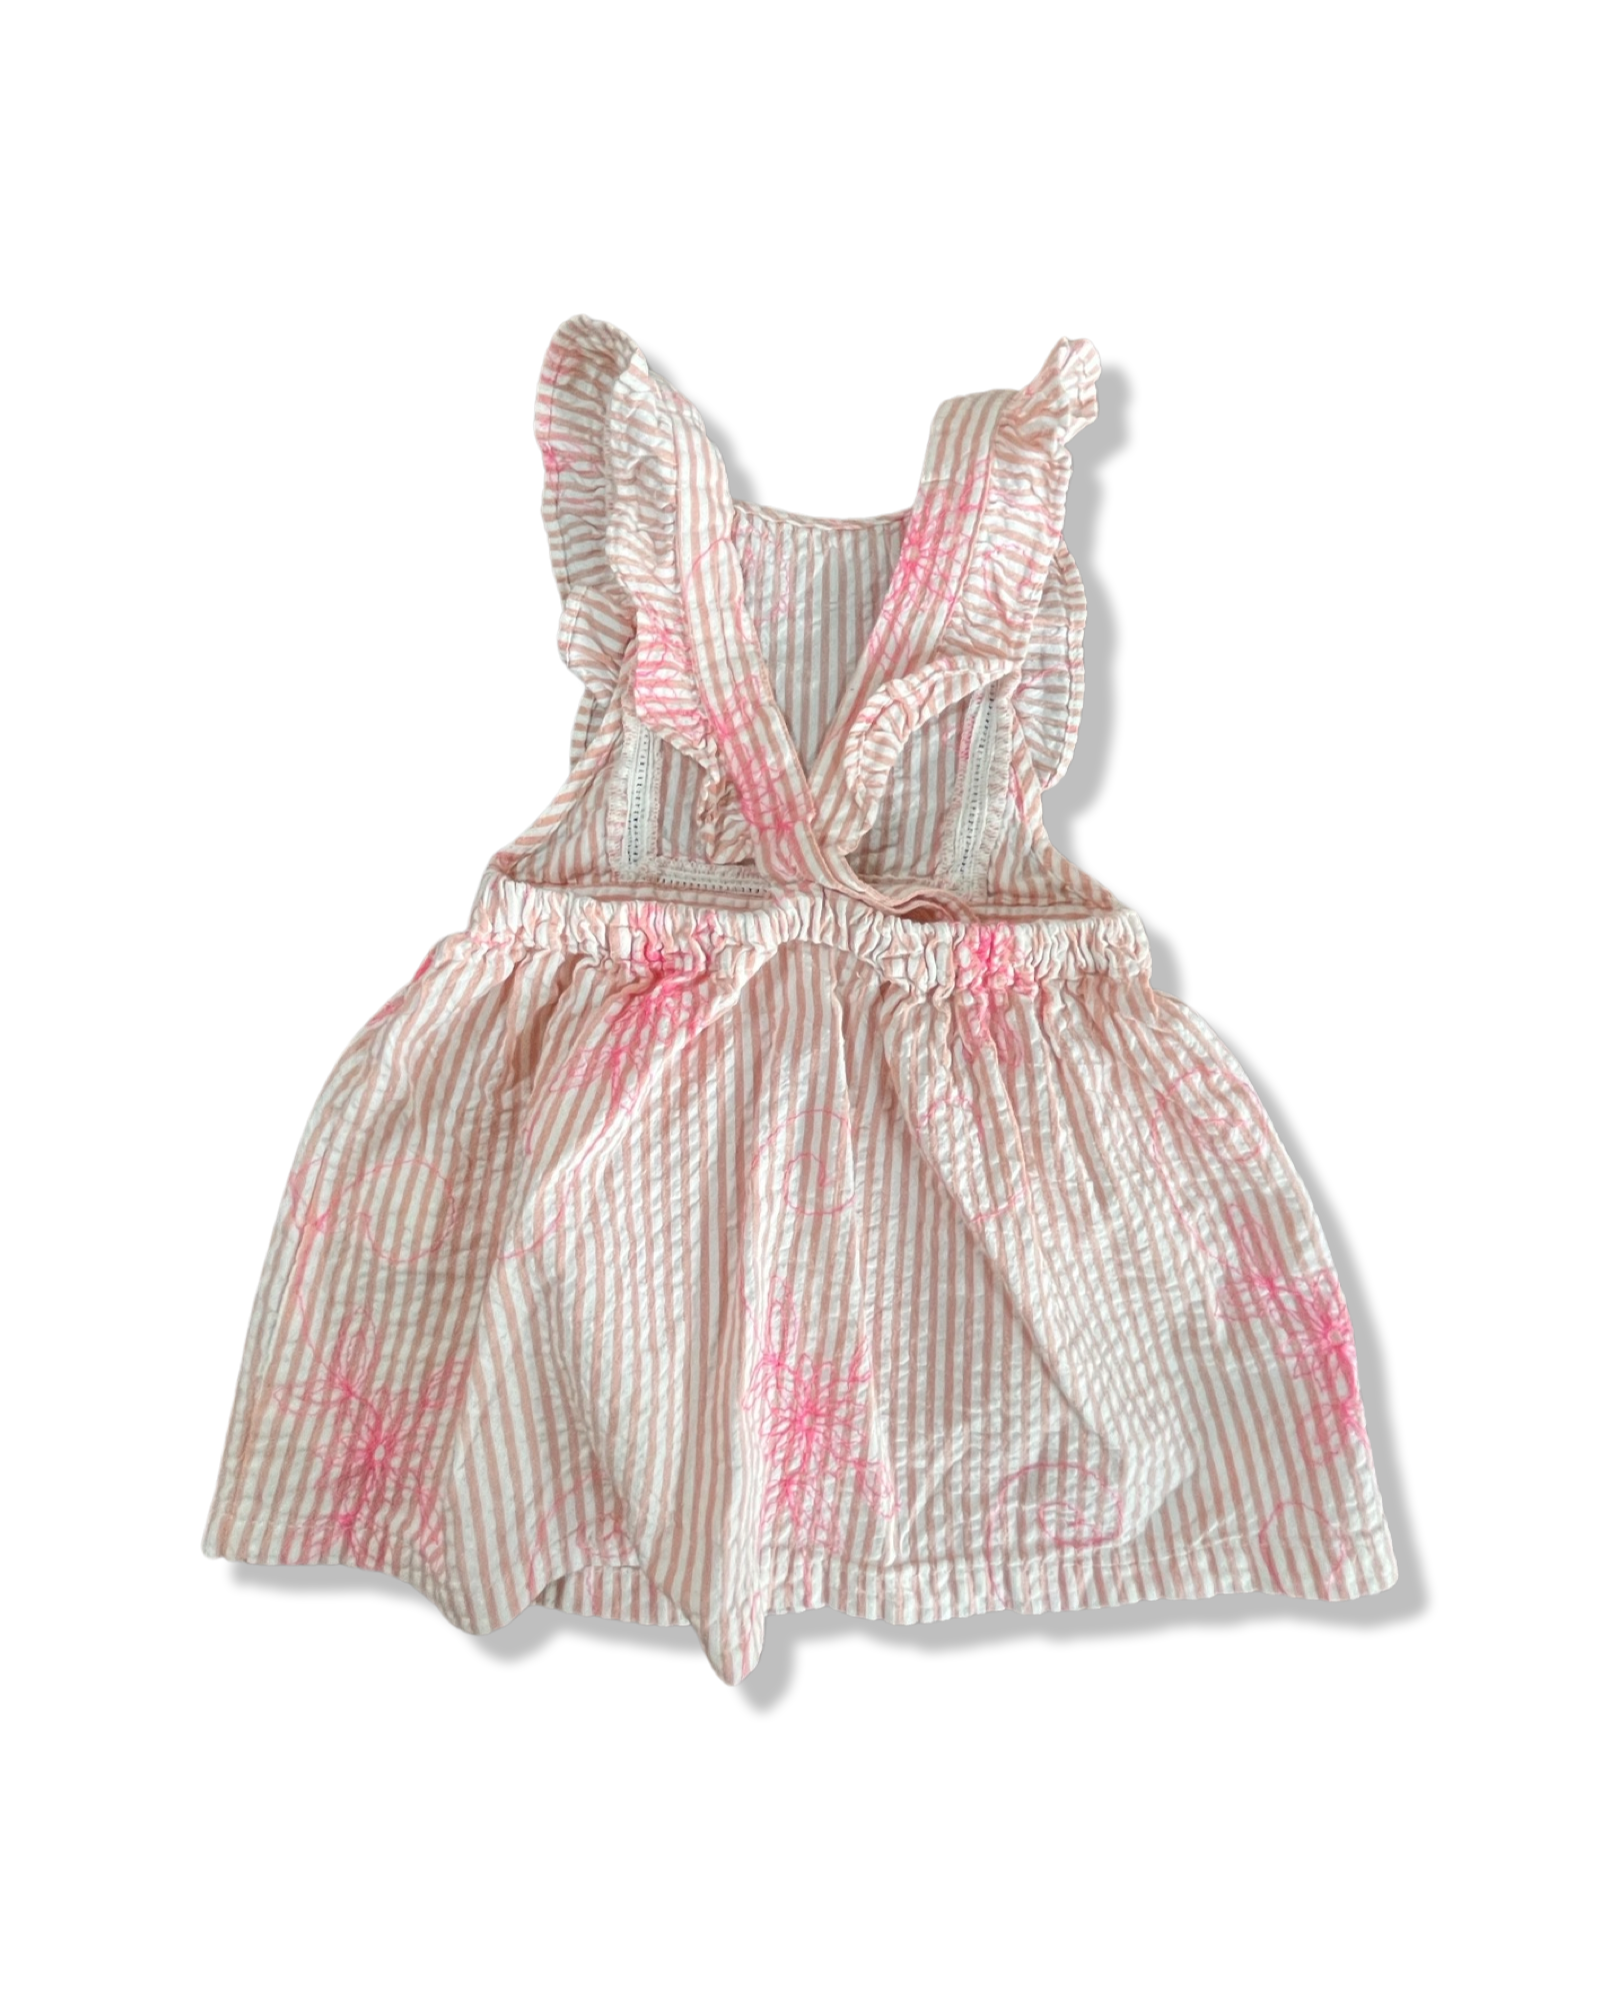 Zara Pink Overall Dress (18-24M)